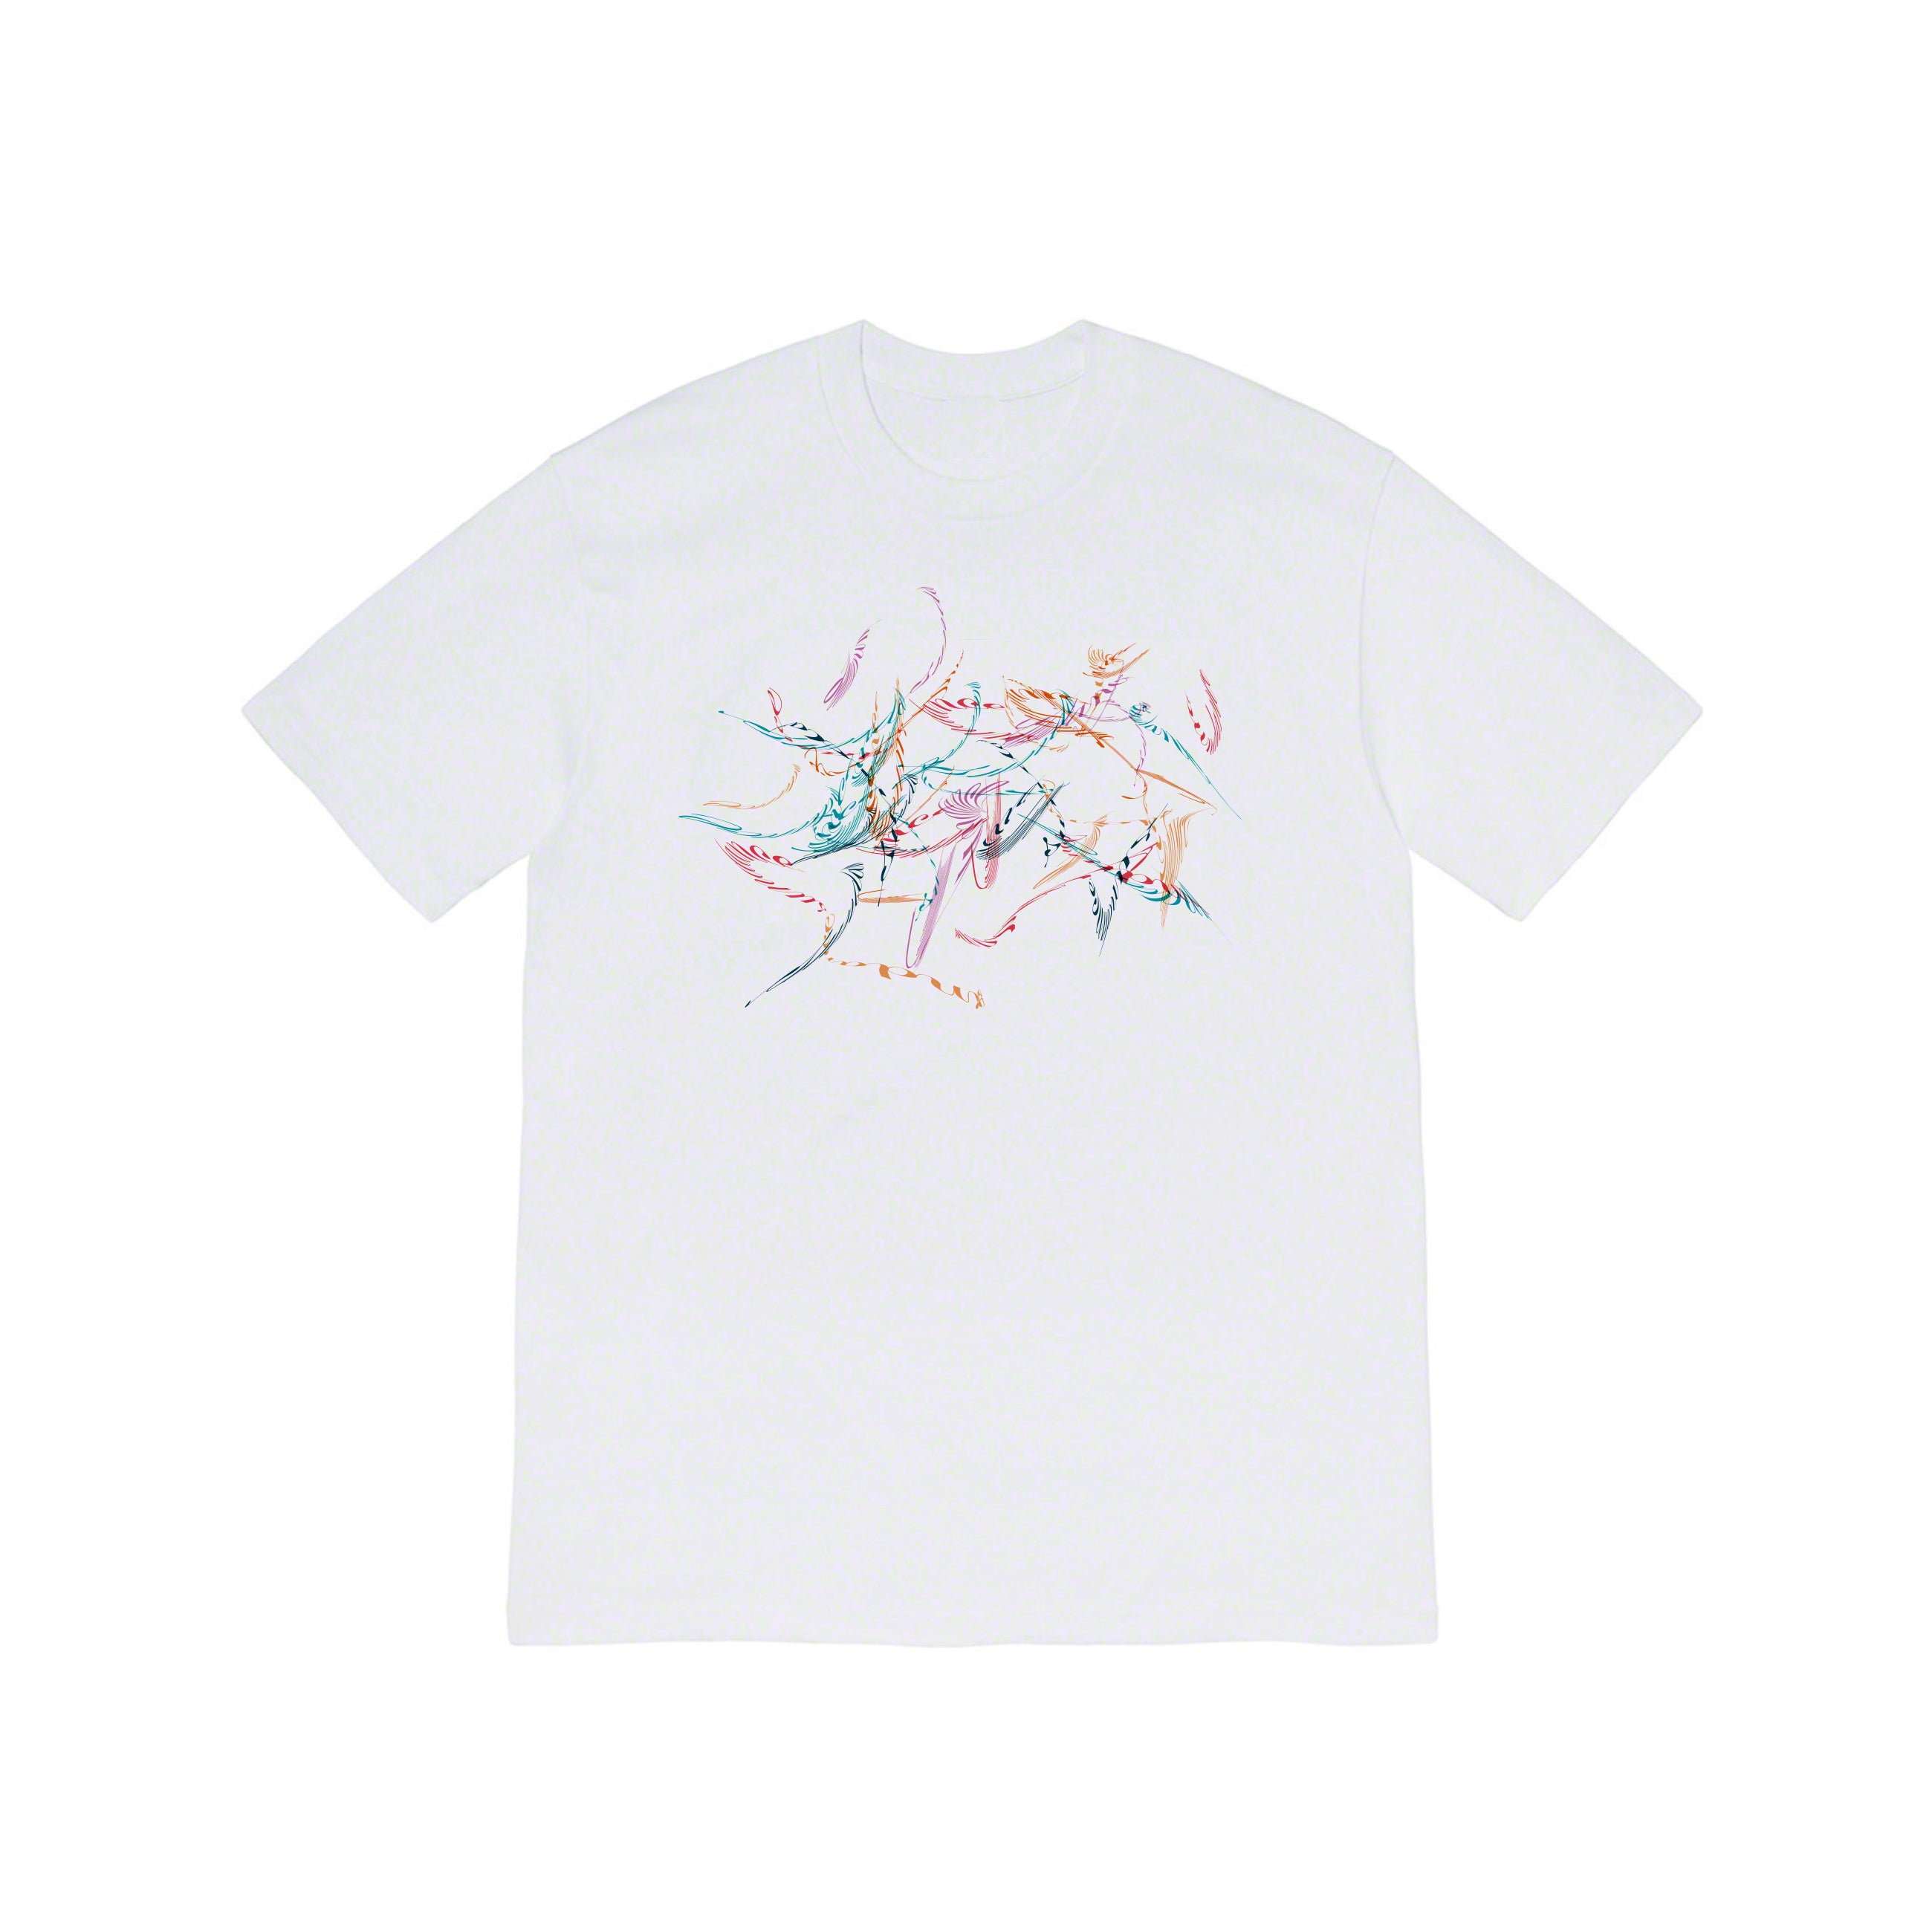 Flying Sundance 10 oz Oversize T-shirt White/Colors